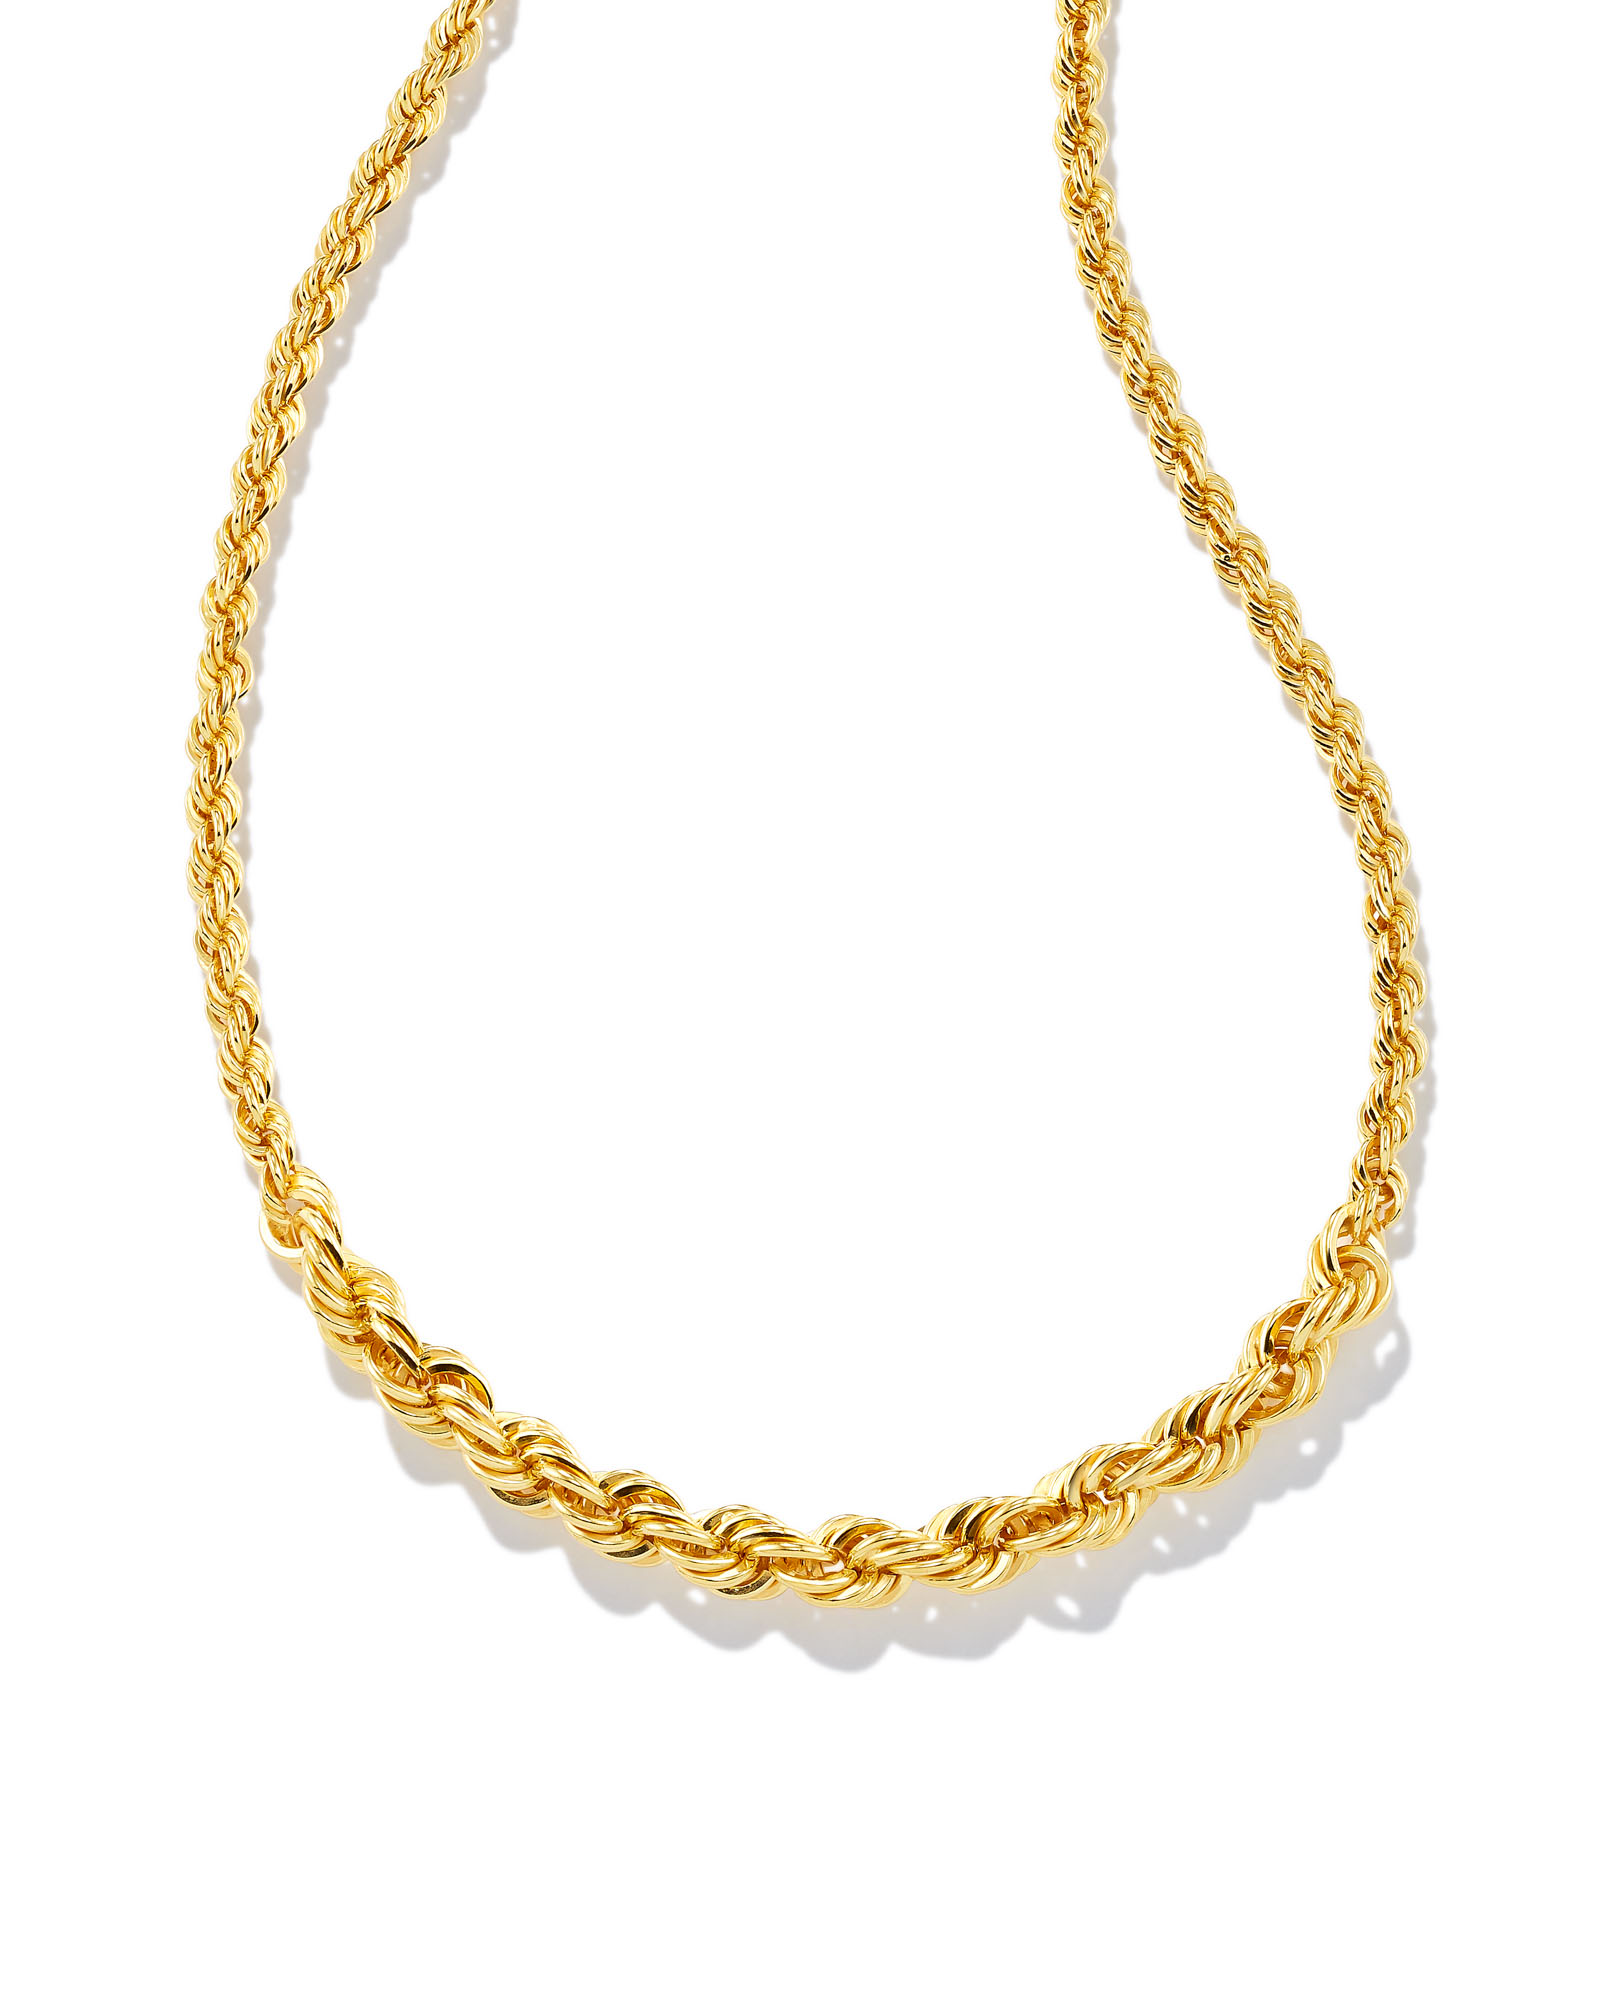 Saylor Chain Necklace in 18k Gold Vermeil | Kendra Scott